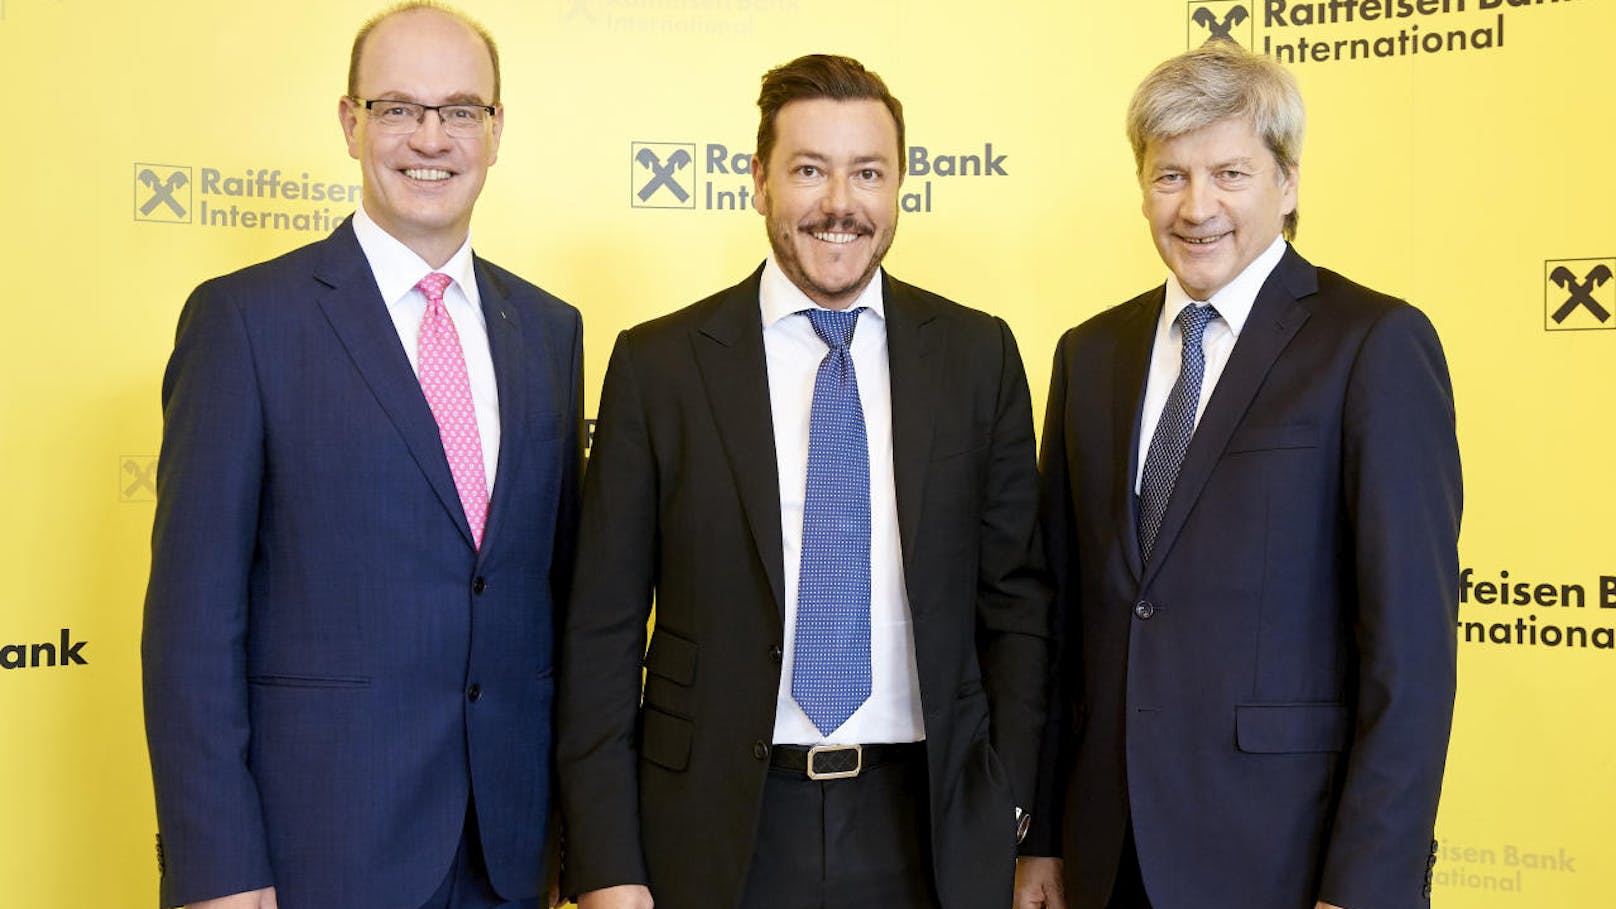 v.l.n.r.: Peter Lennkh (Raiffeisen), René Benko, Johann Strobl beim RBI Business Lunch